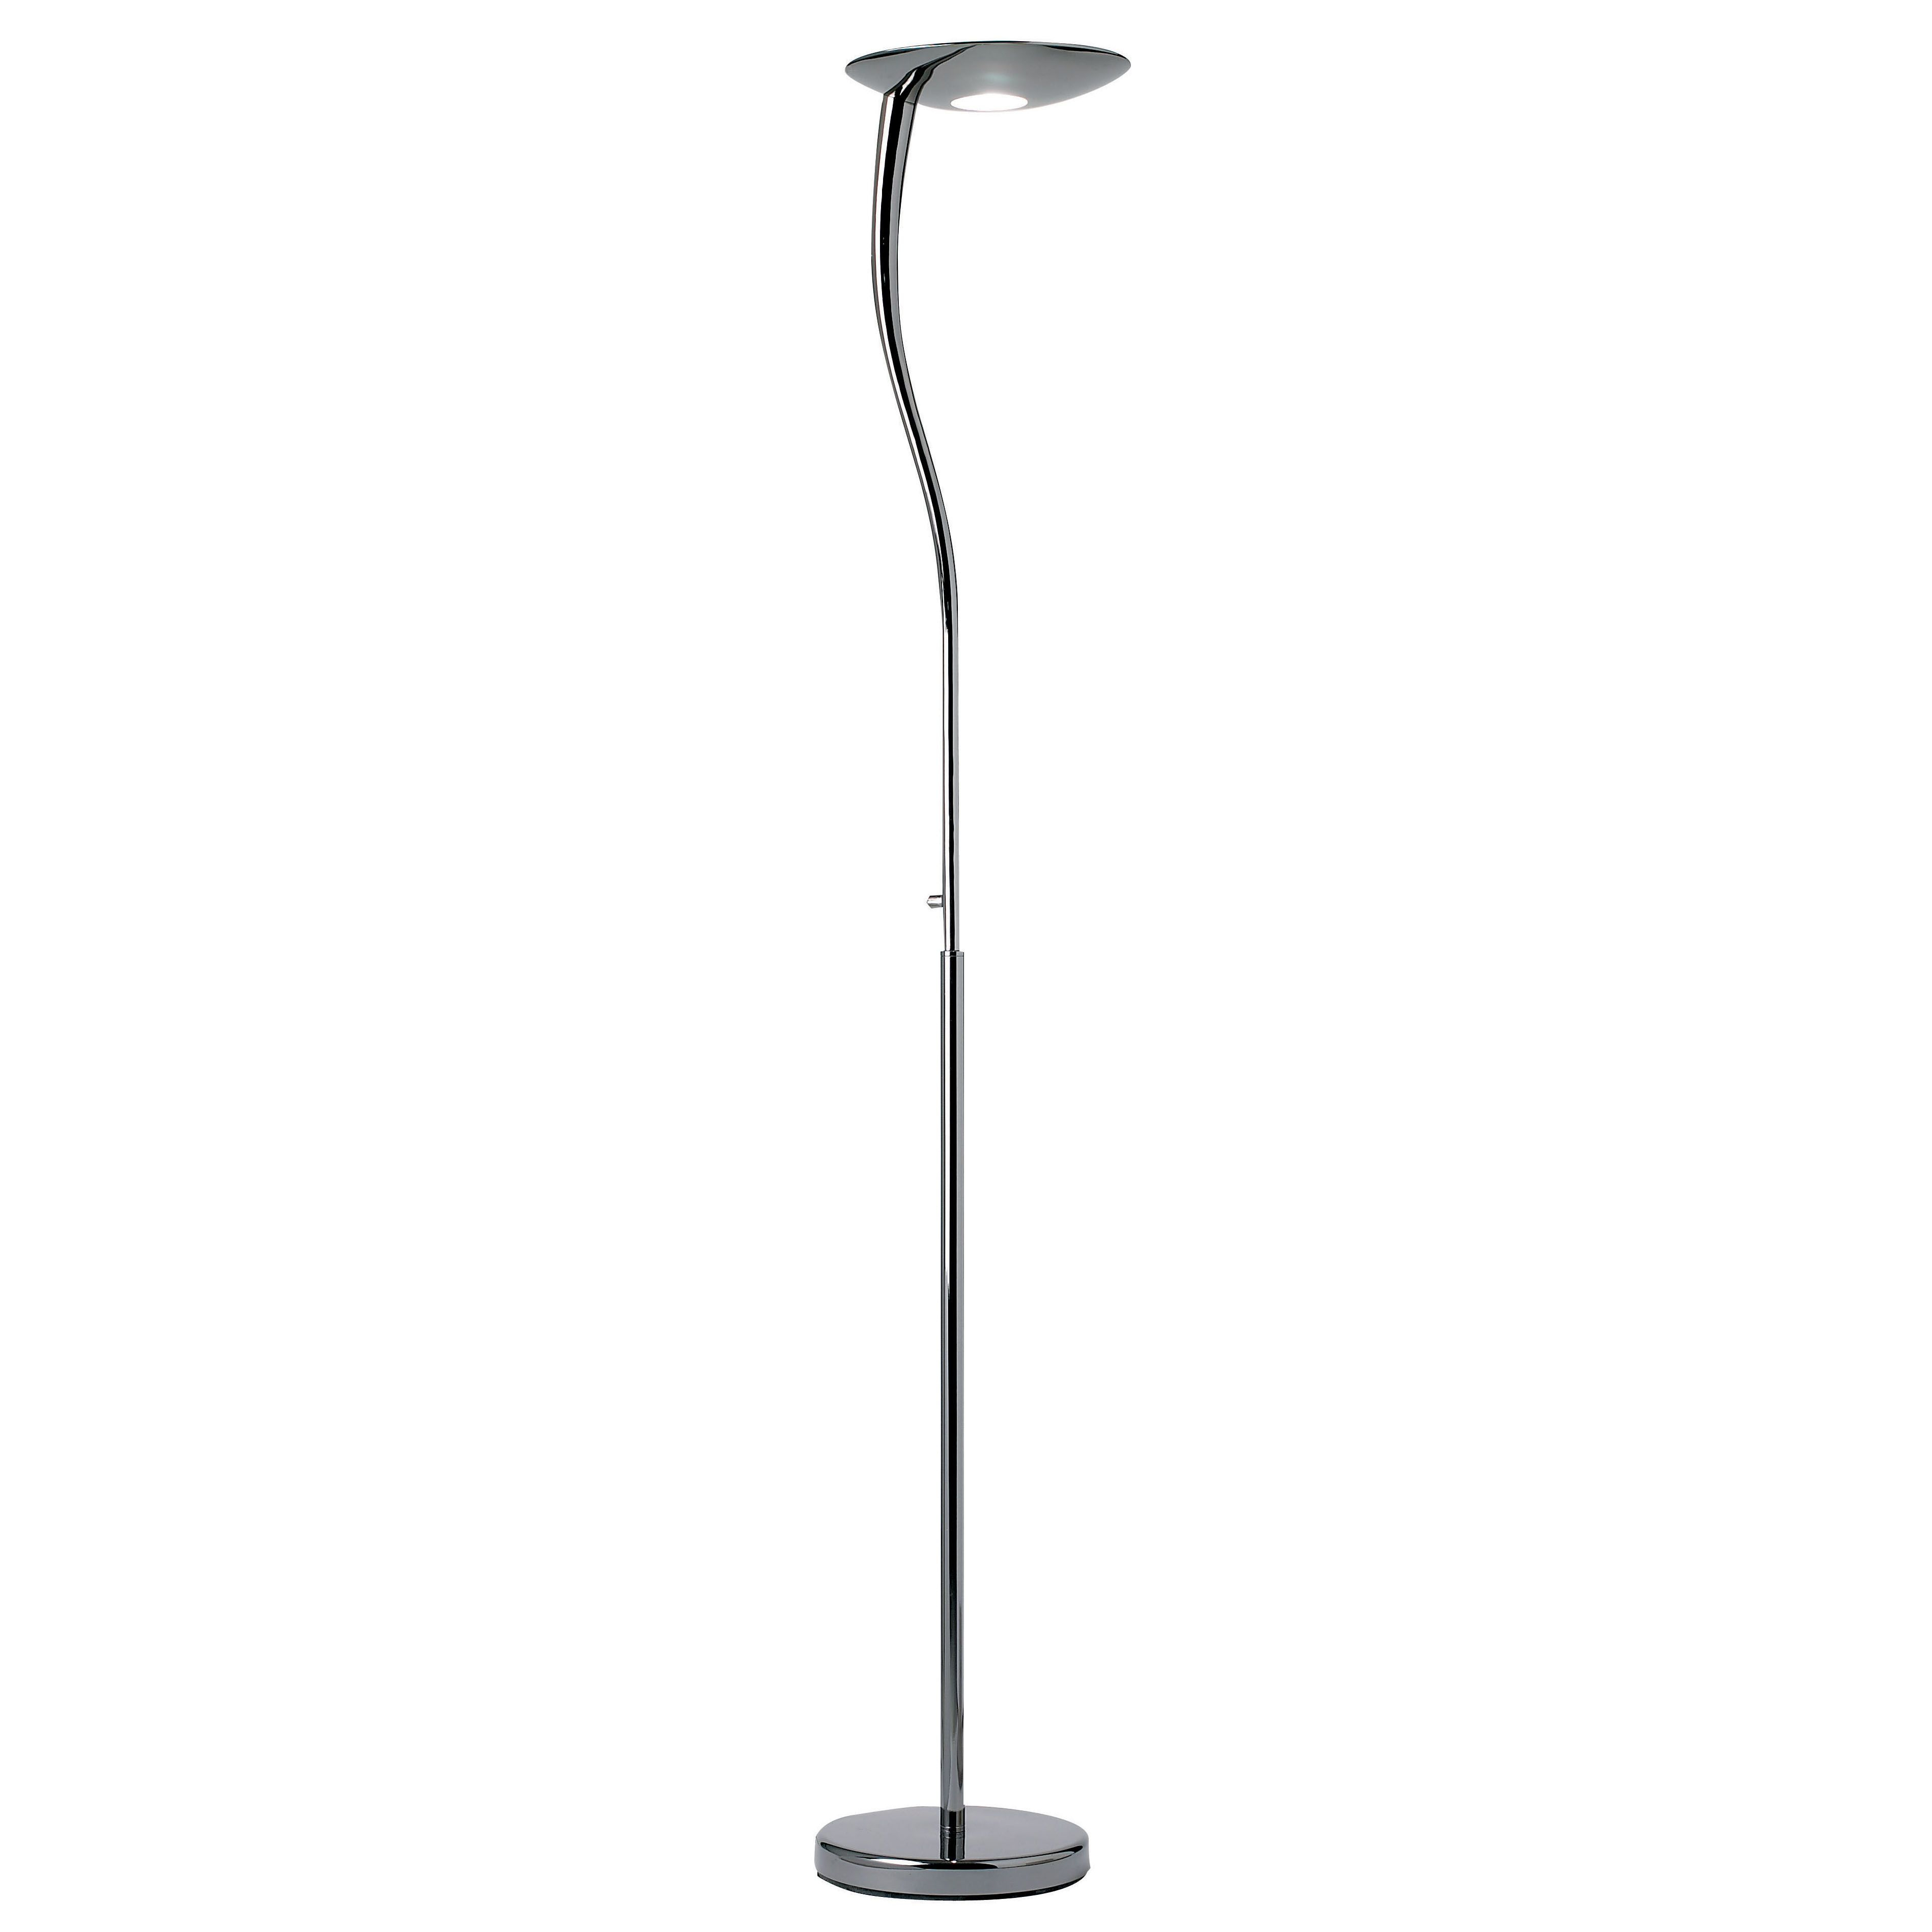 Black Chrome Halogen Floor Lamp Dimmer 300w Rimini Bc Lamps throughout size 3796 X 3796